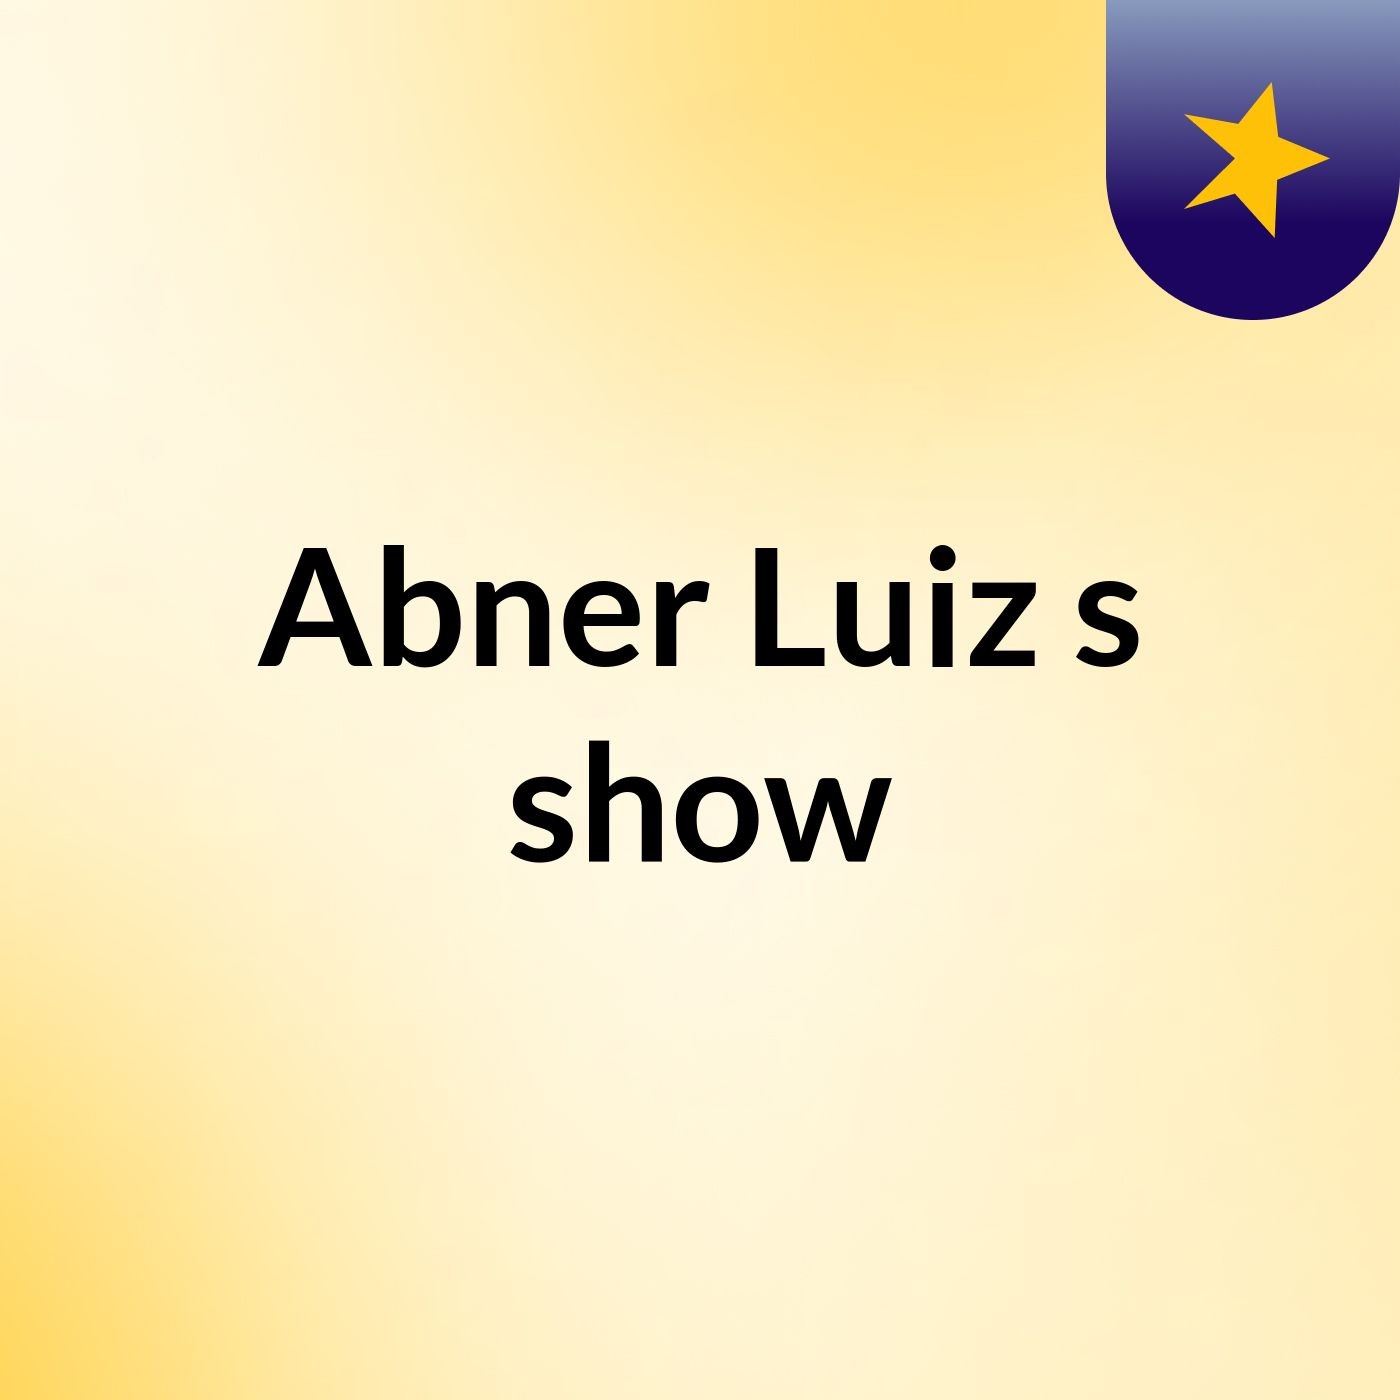 Abner Luiz's show